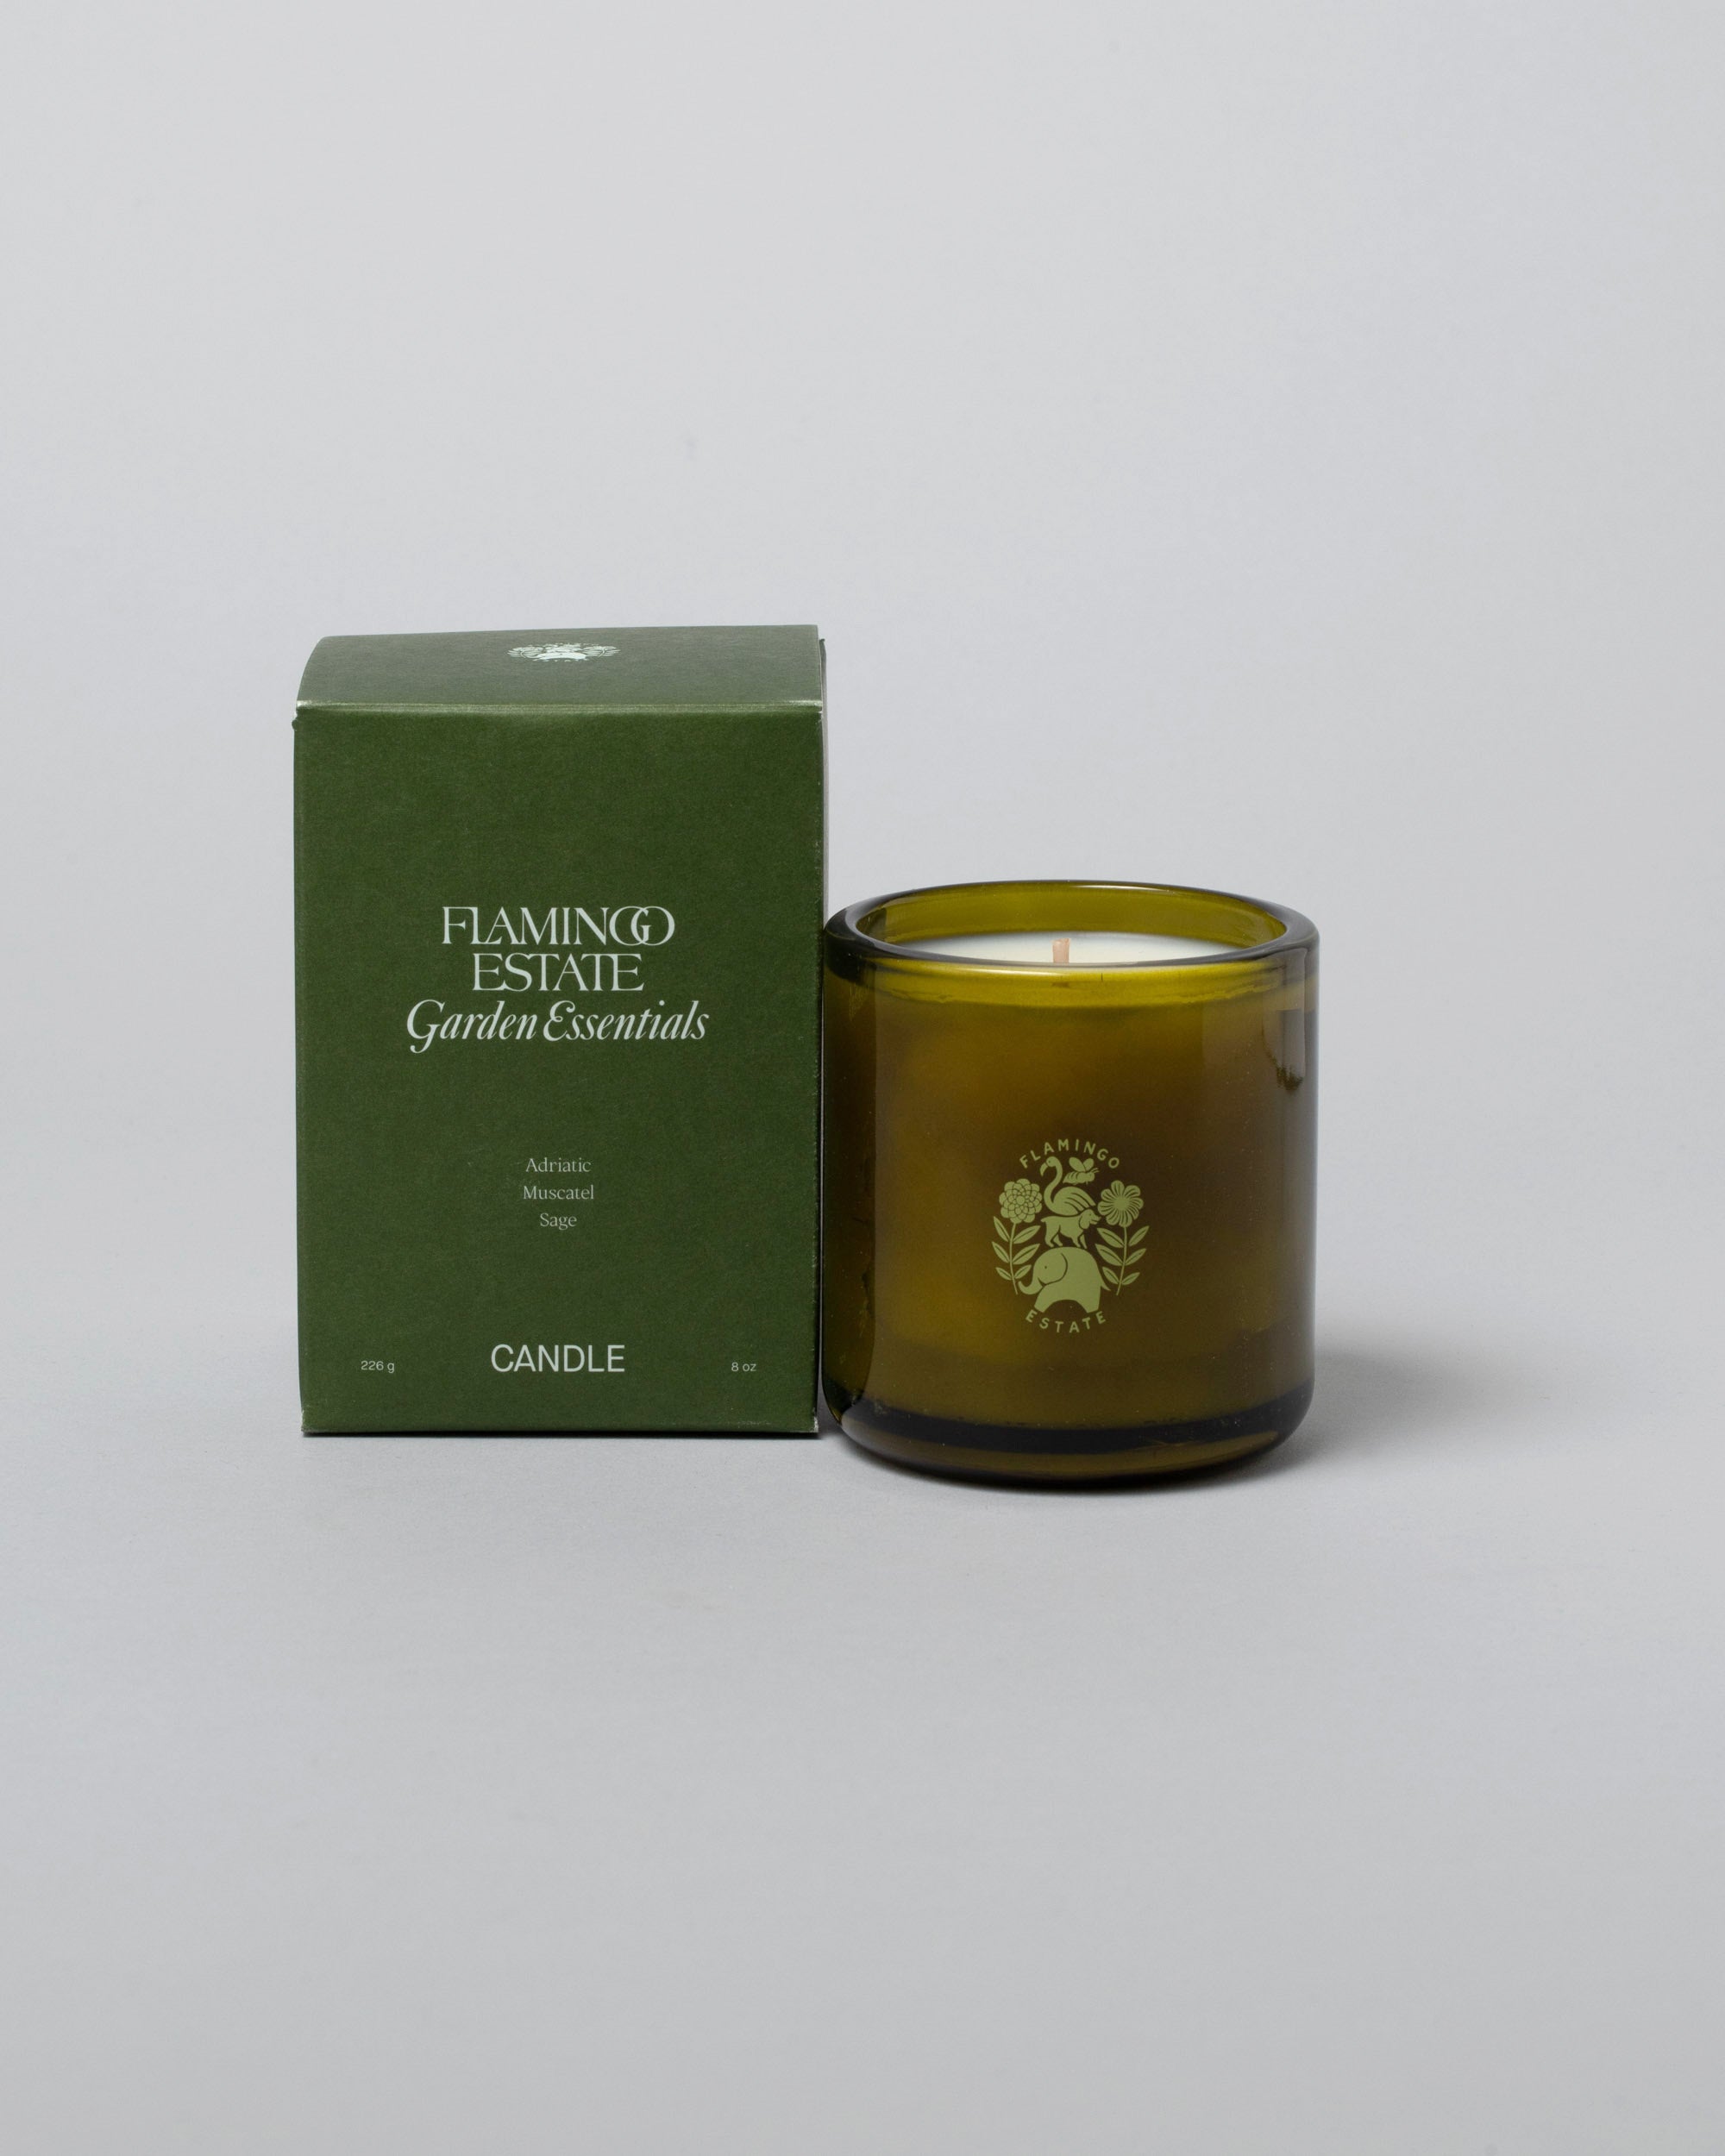 Maison Louis Marie - No.04 Bois de Balincourt Natural Soy Wax Candle |  Luxury Clean Beauty + Non-Toxic Fragrance (8.5 oz | 240 g)